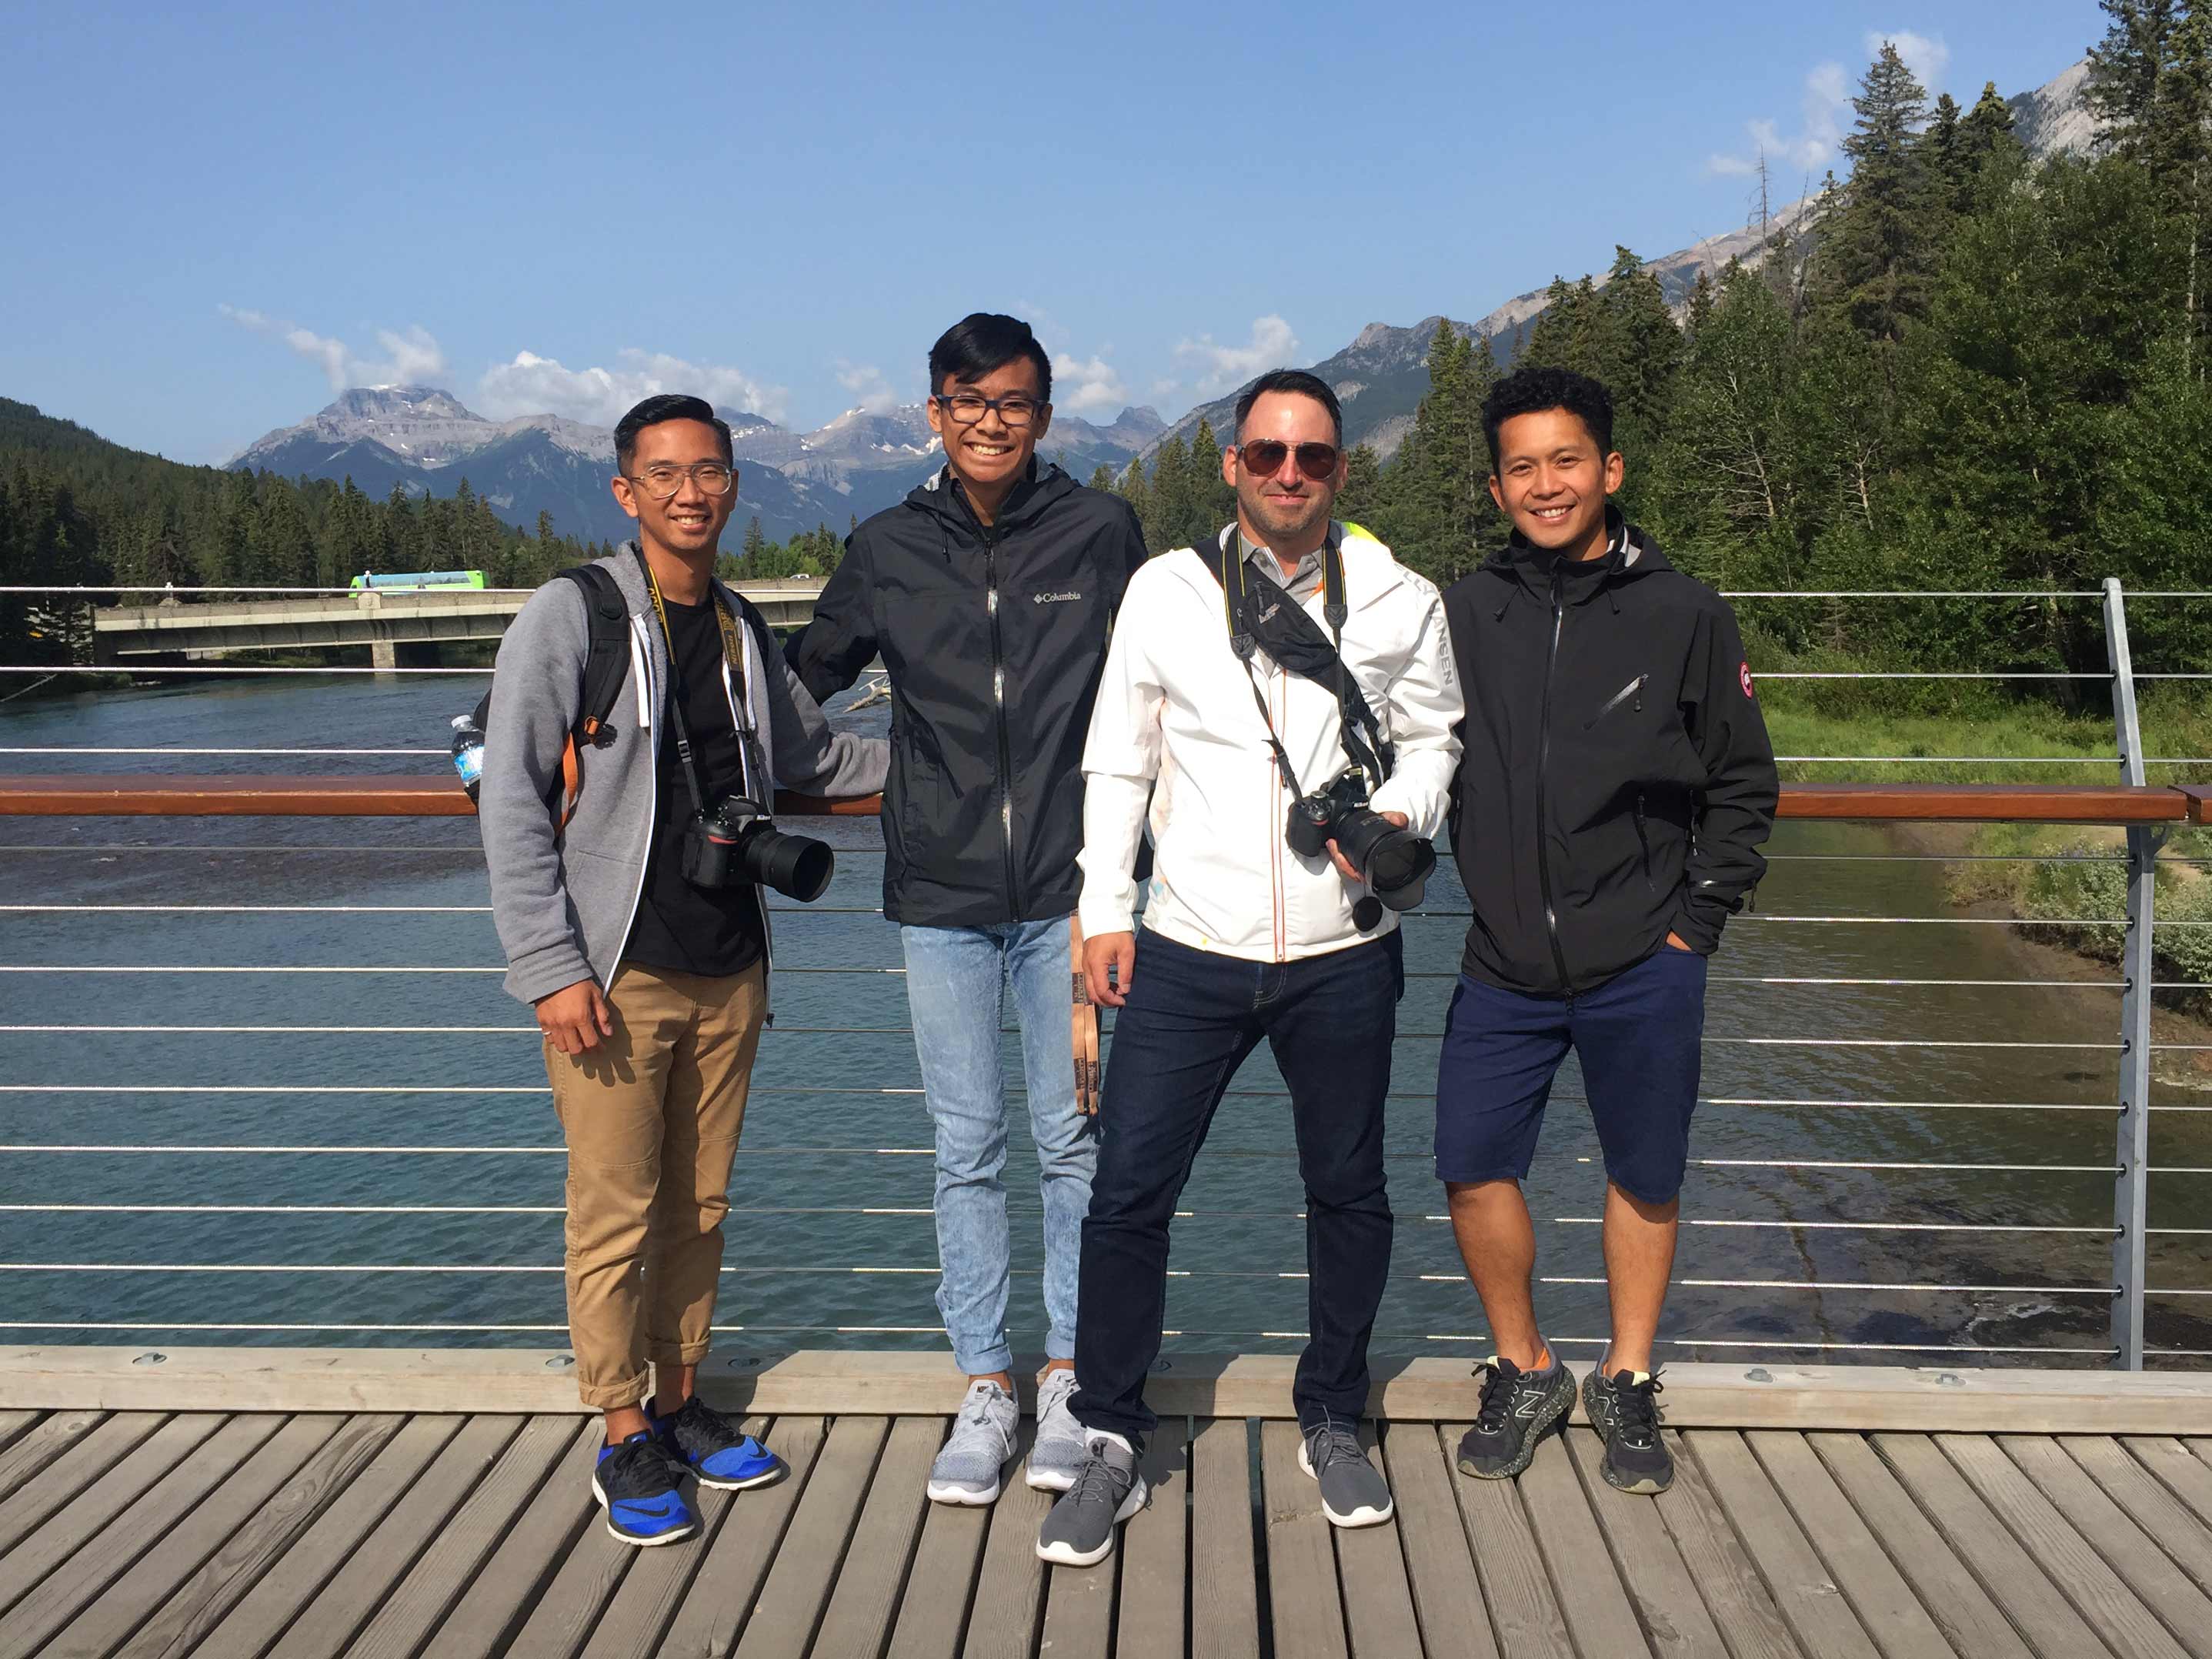 Joseph, Braeden, Grant, and Paulo in Banff, Alberta